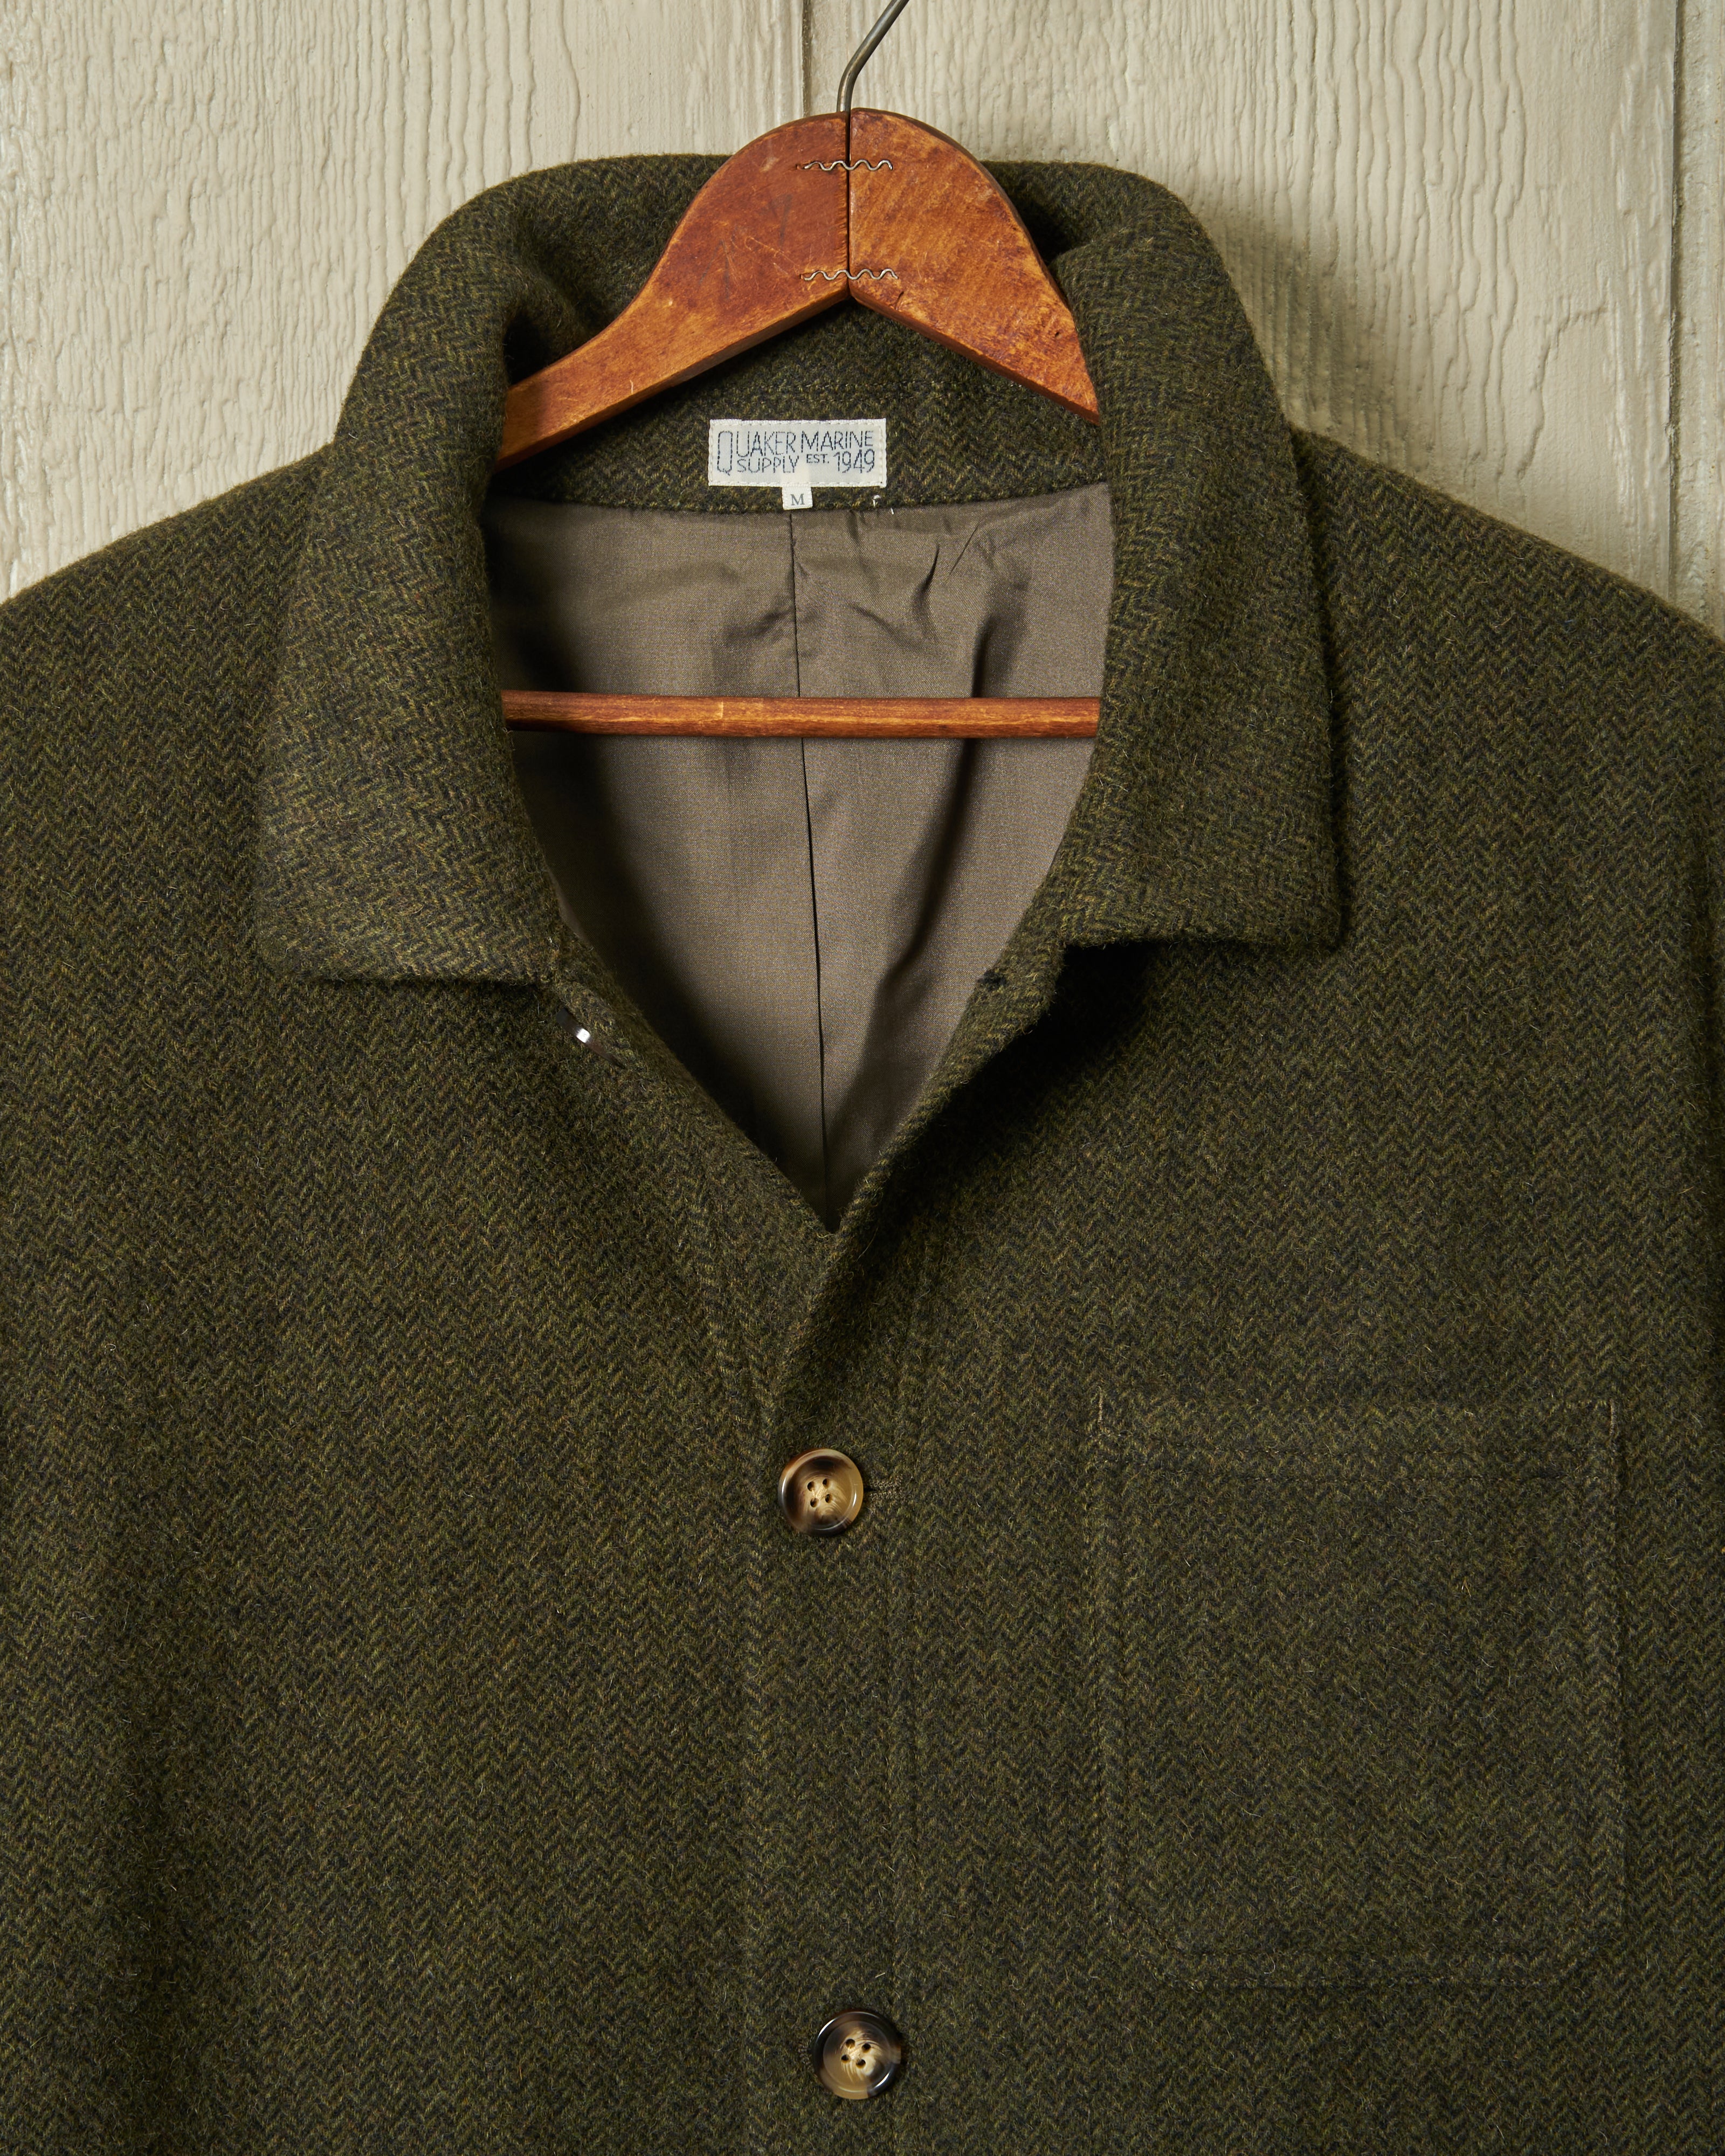 Camelhair French Workman’s Jacket in Olive Herringbone